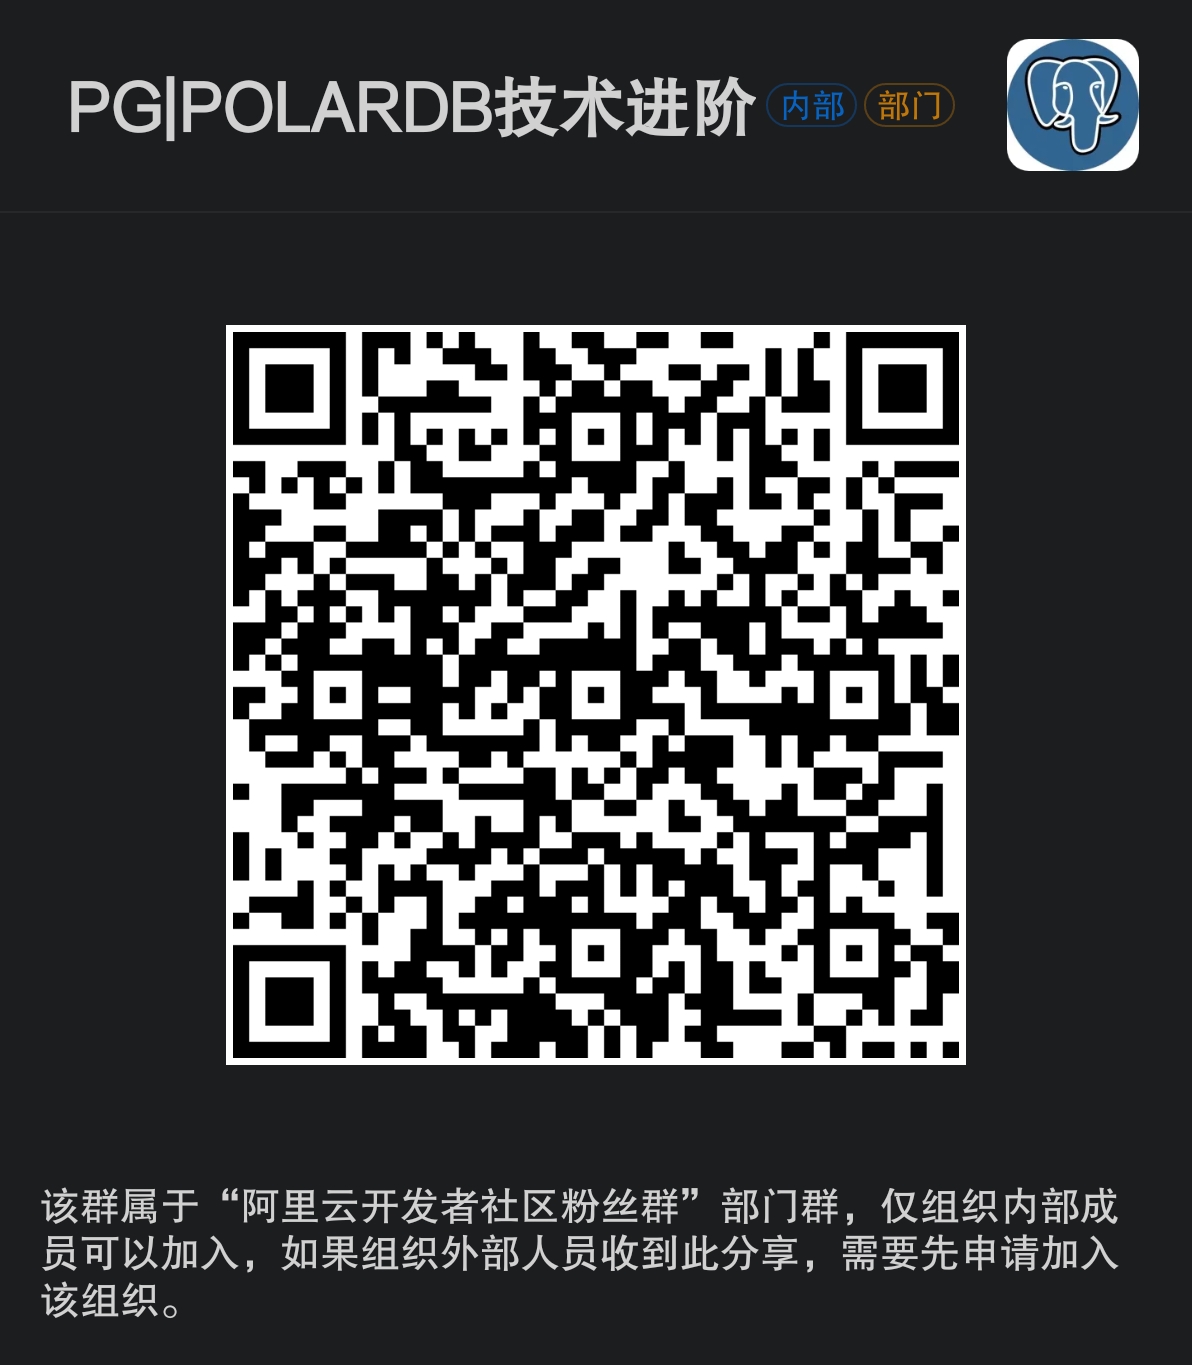 polardb_group.png